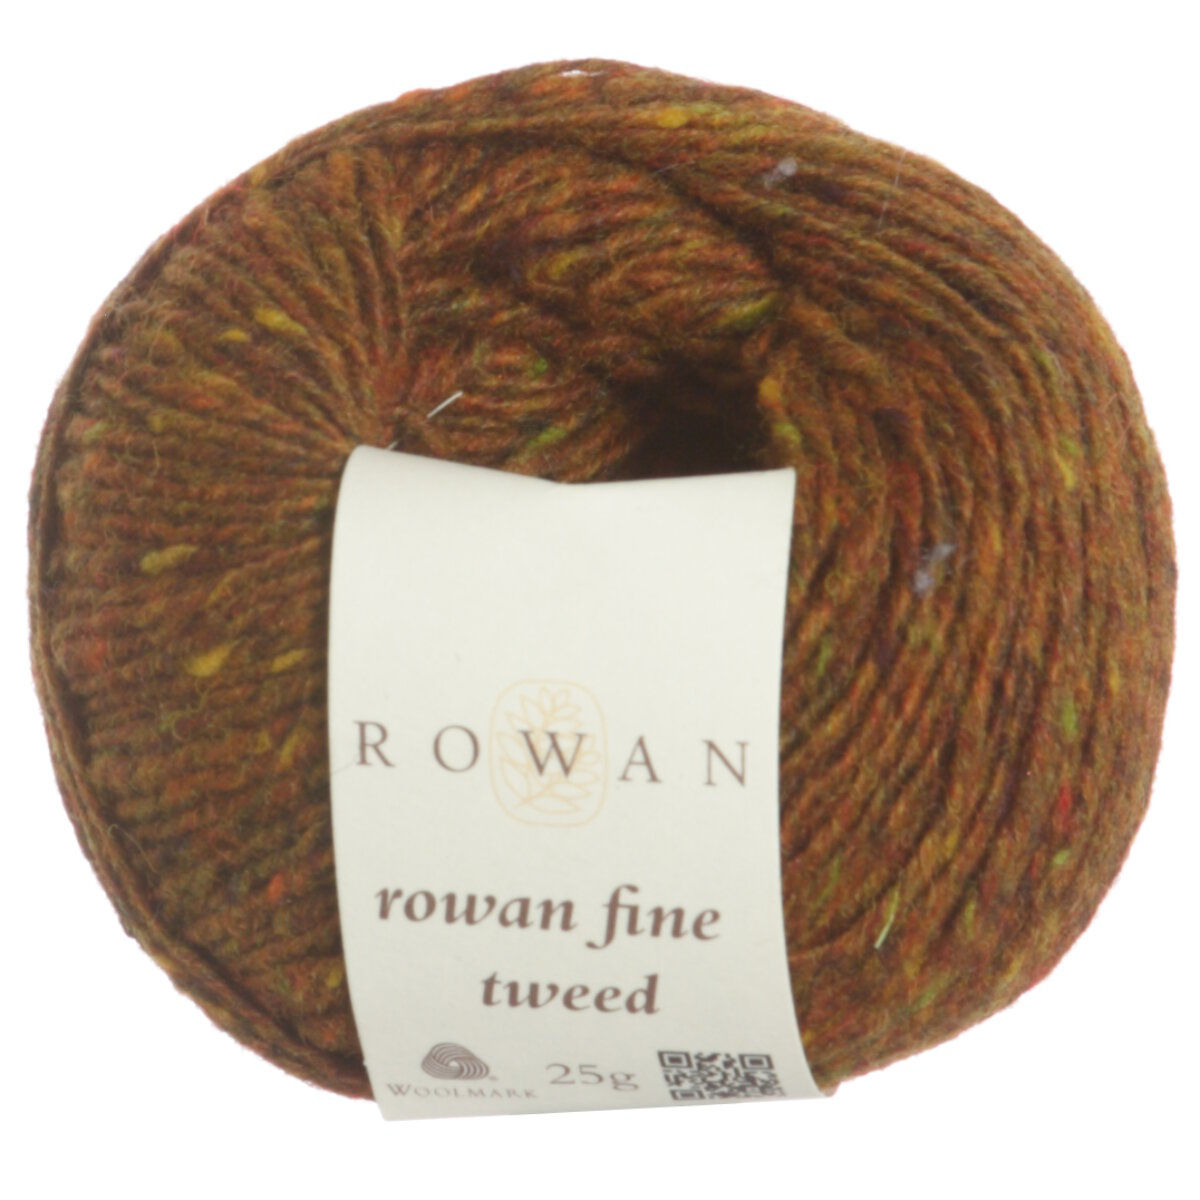 Rowan Tweed Yarn - 373 Dent at Jimmy Beans Wool